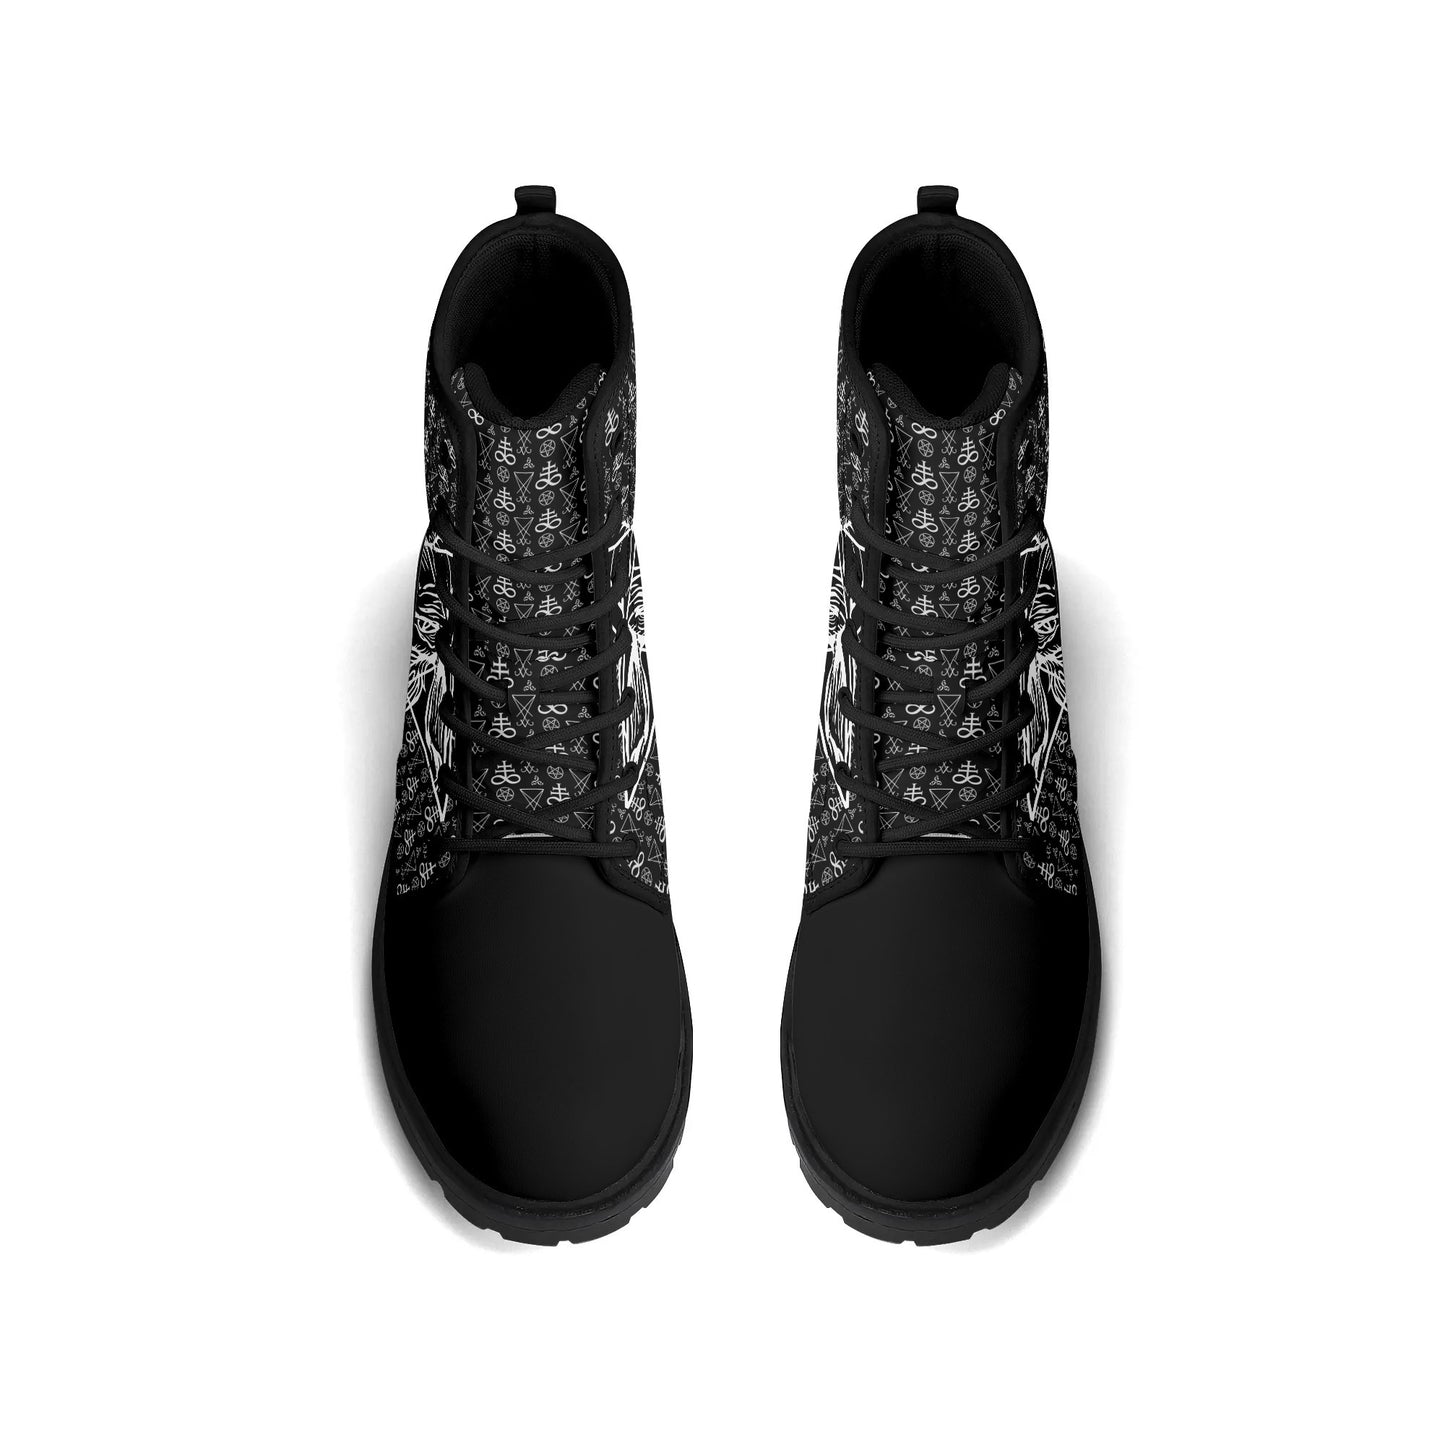 Dark Achemly Women's Leather Boots